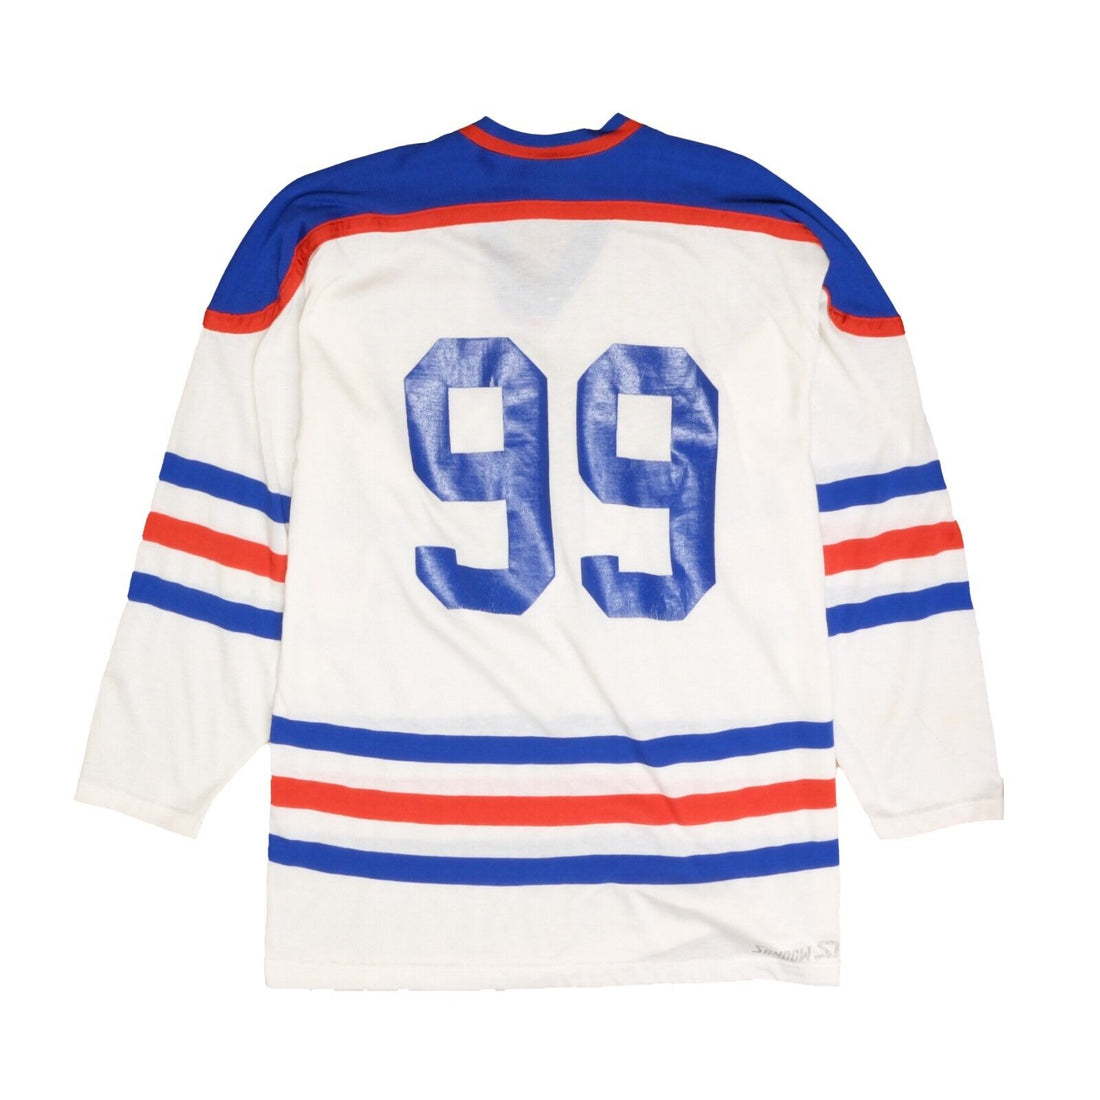 Vintage Edmonton Oilers Sandow SK jersey (Size S) - Gretzky